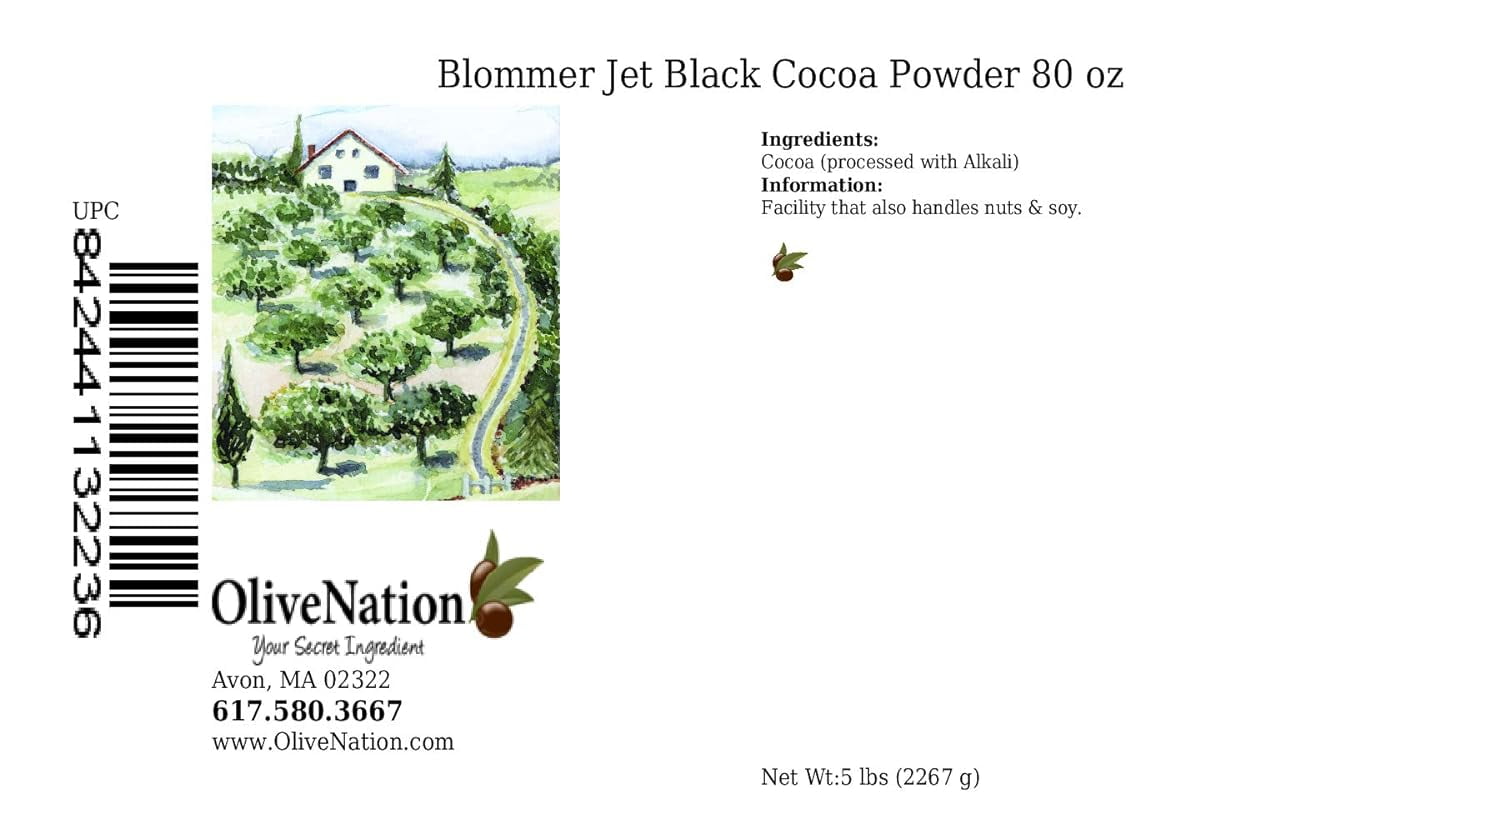 Blommer Jet Black Cocoa Powder 80 oz